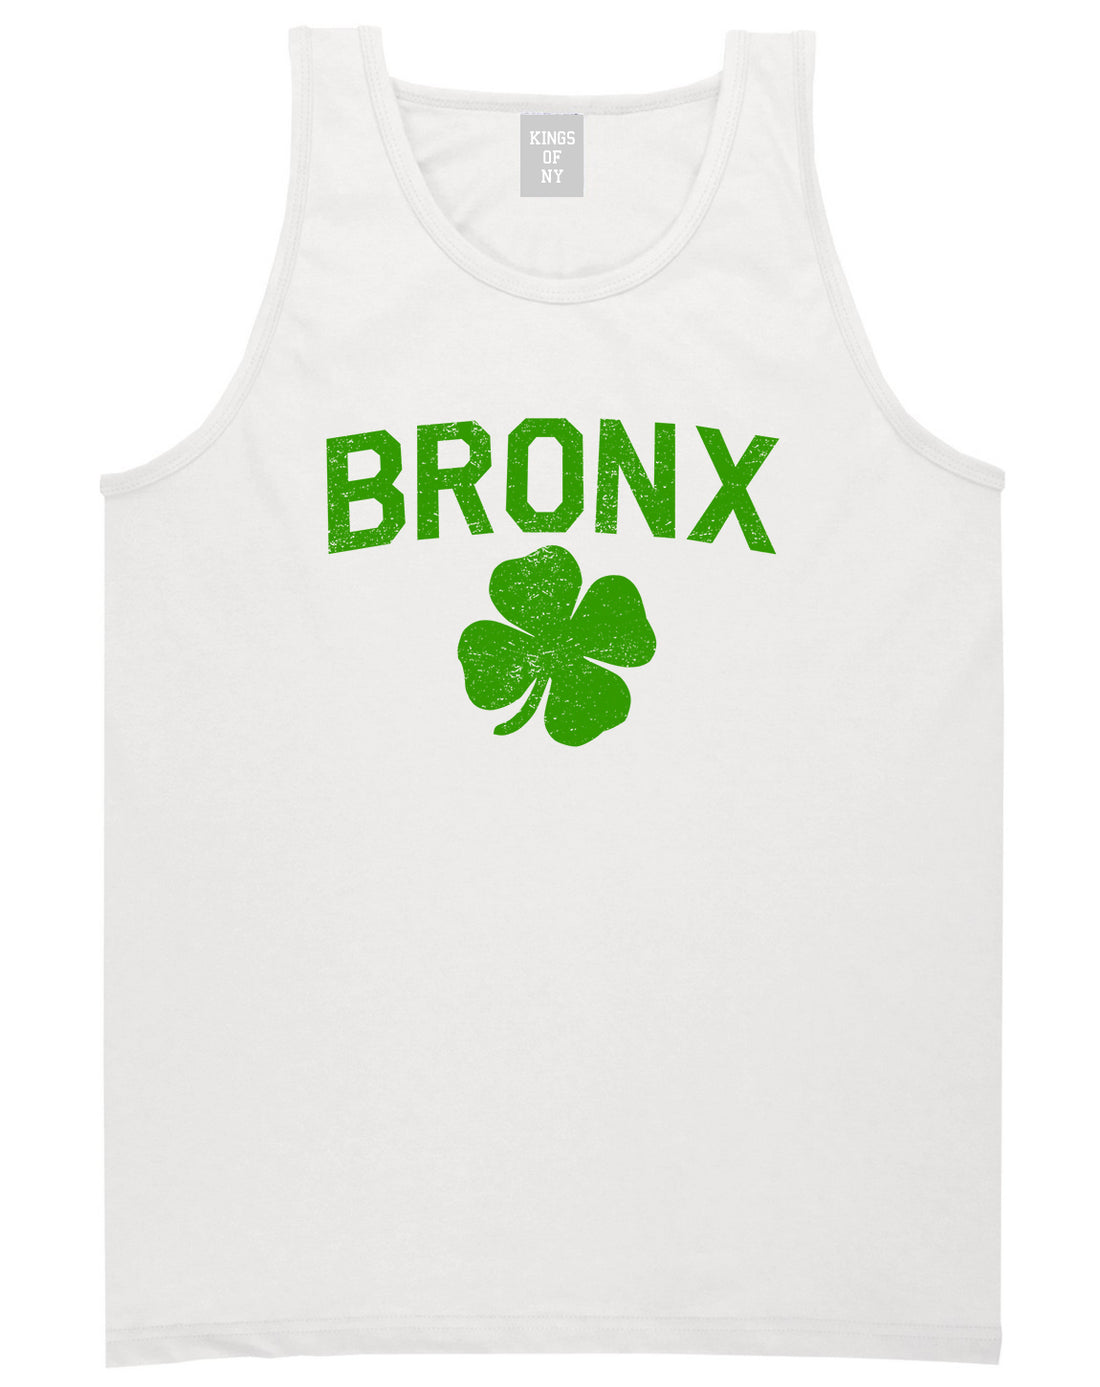 The Bronx Irish St Patricks Day Mens Tank Top T-Shirt White